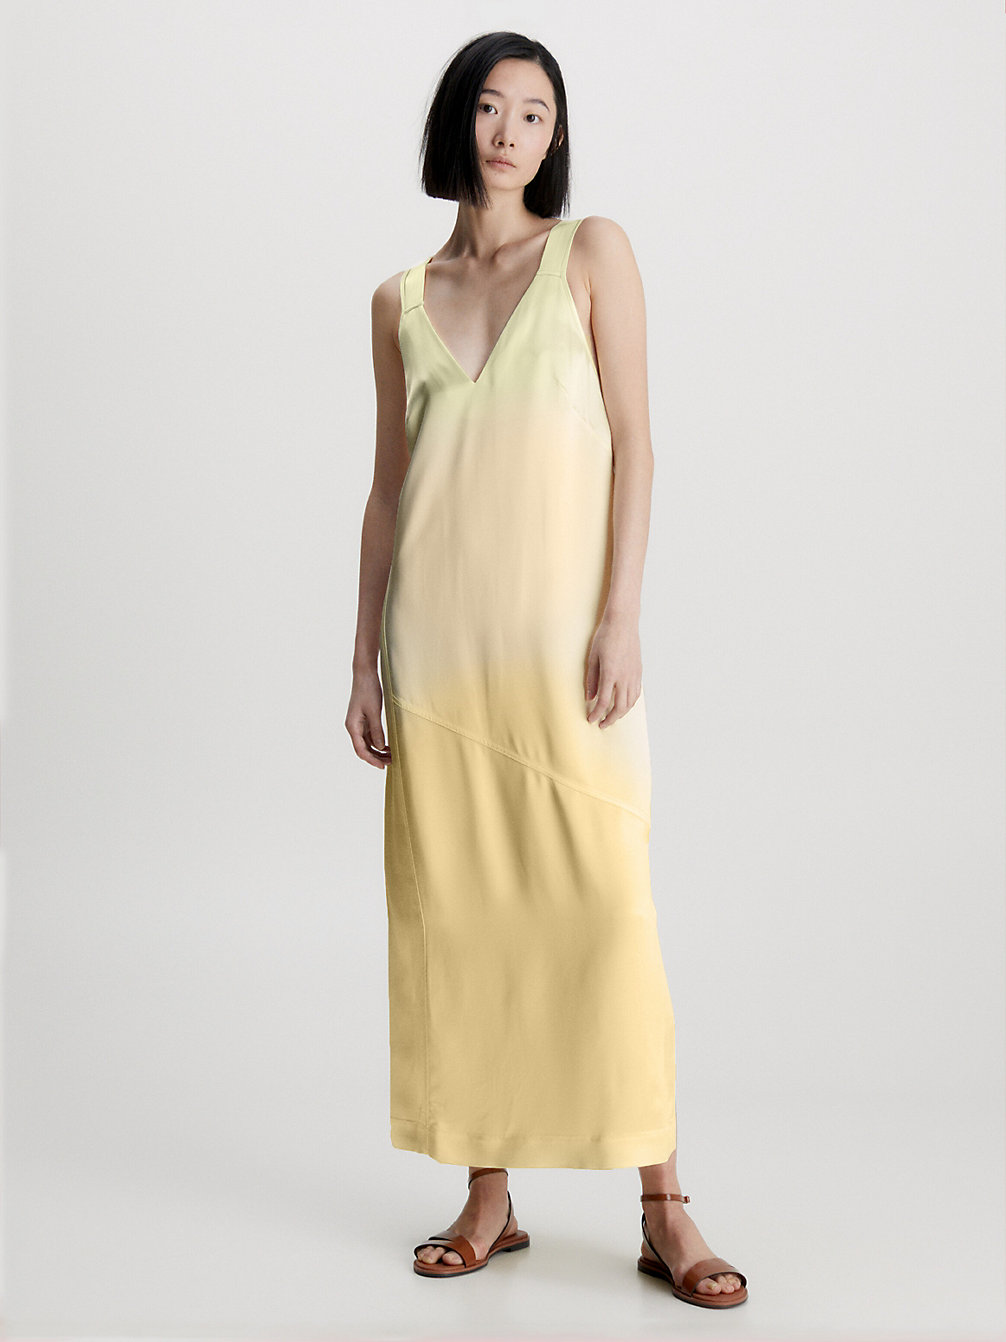 BUTTERCREAM FROST Slim Midi Slip Dress undefined women Calvin Klein